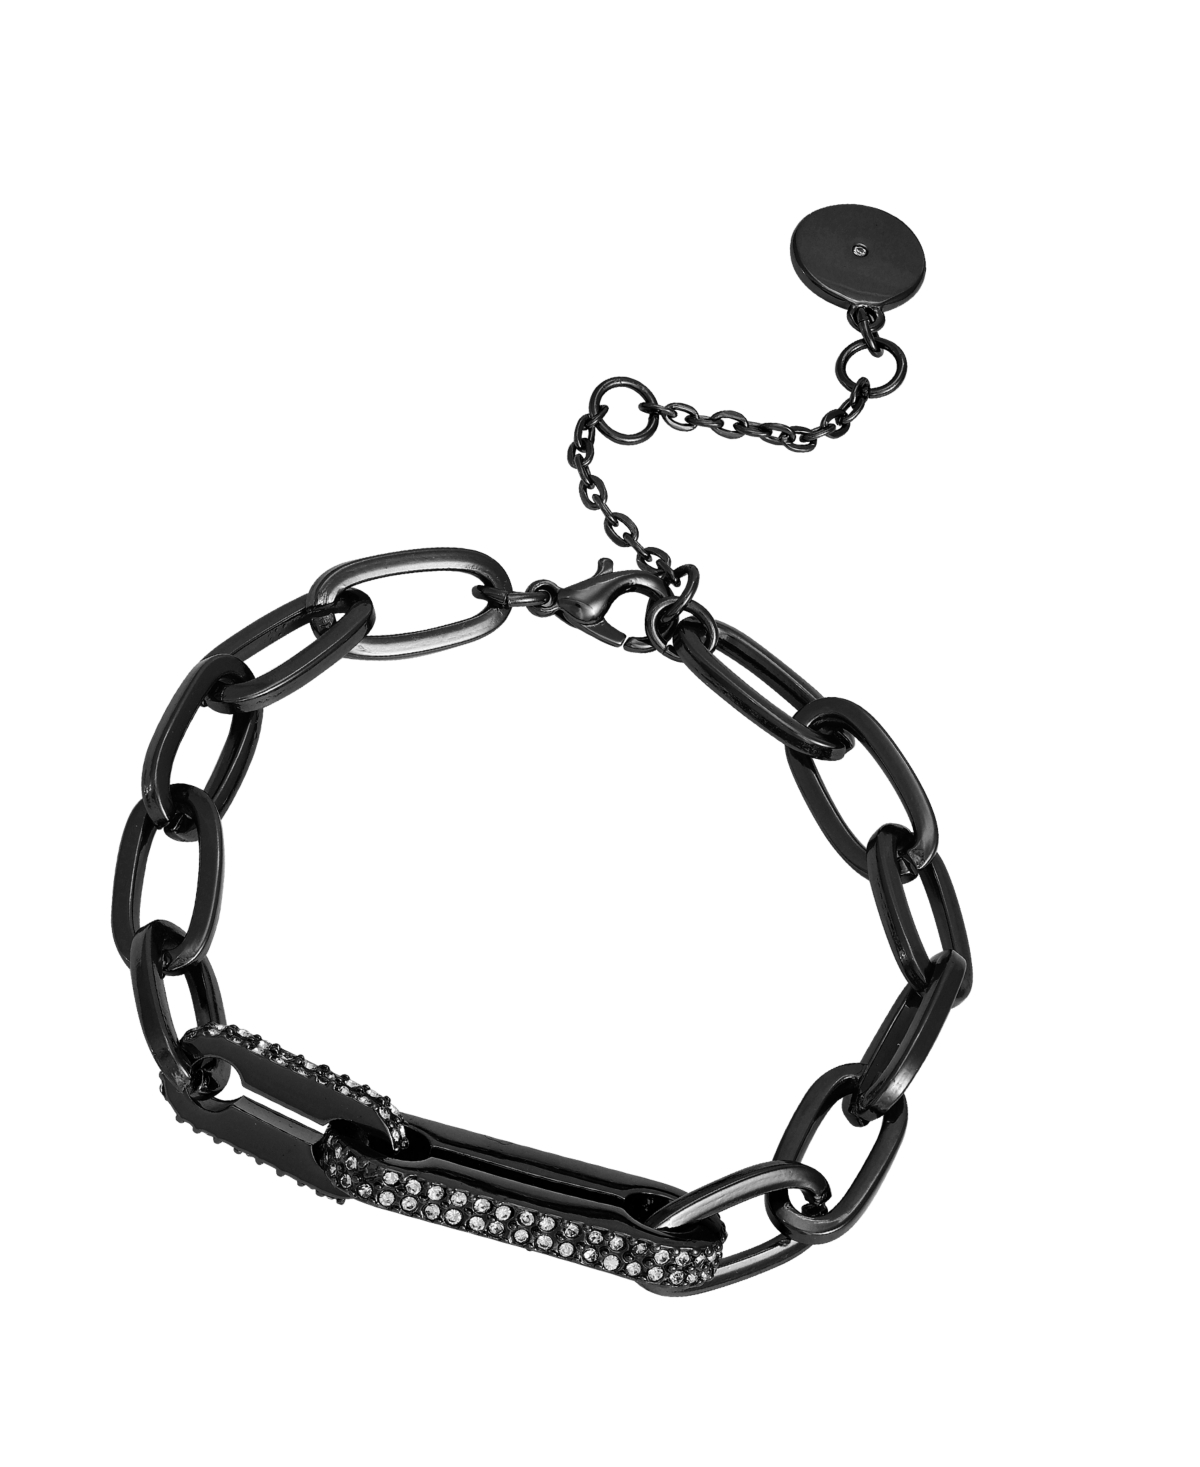 Hematite-Tone Cable Chain Link Bracelet, 7.5" + 2" Extender - Silver, Hematite